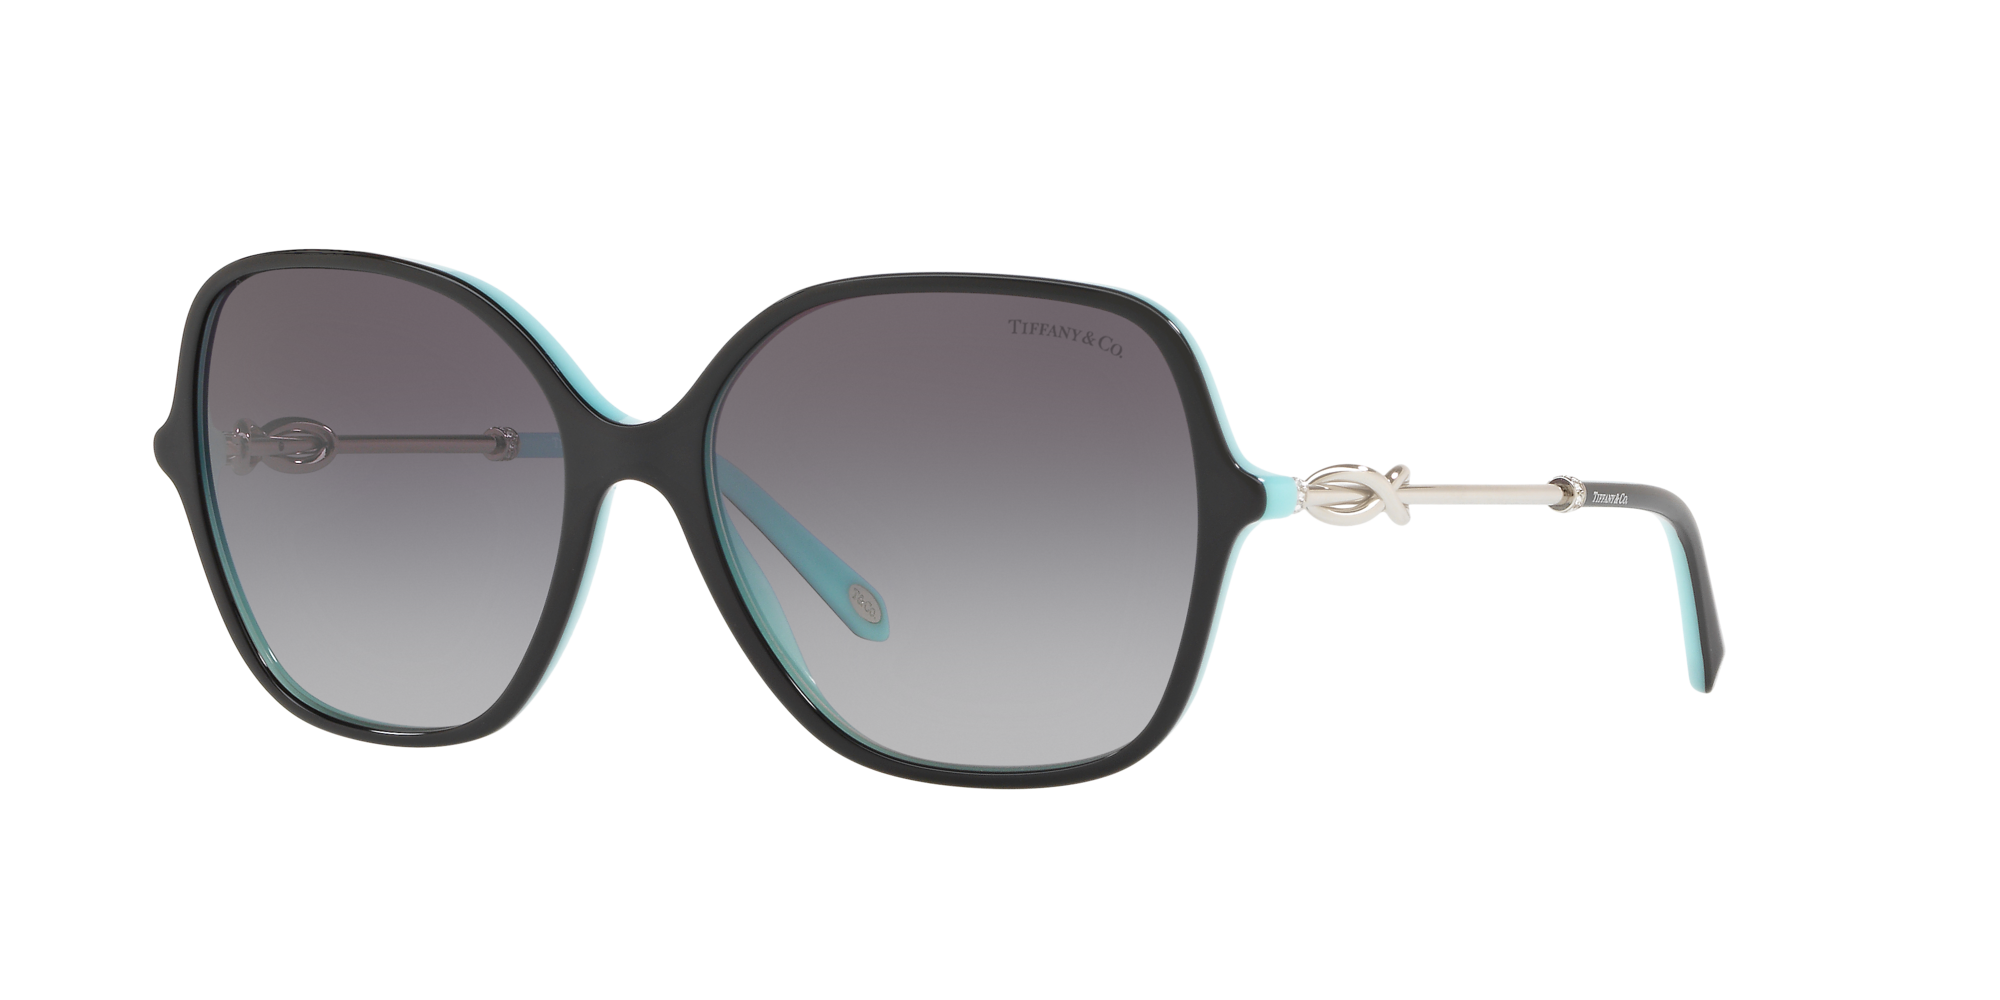 tiffany sunglasses on sale